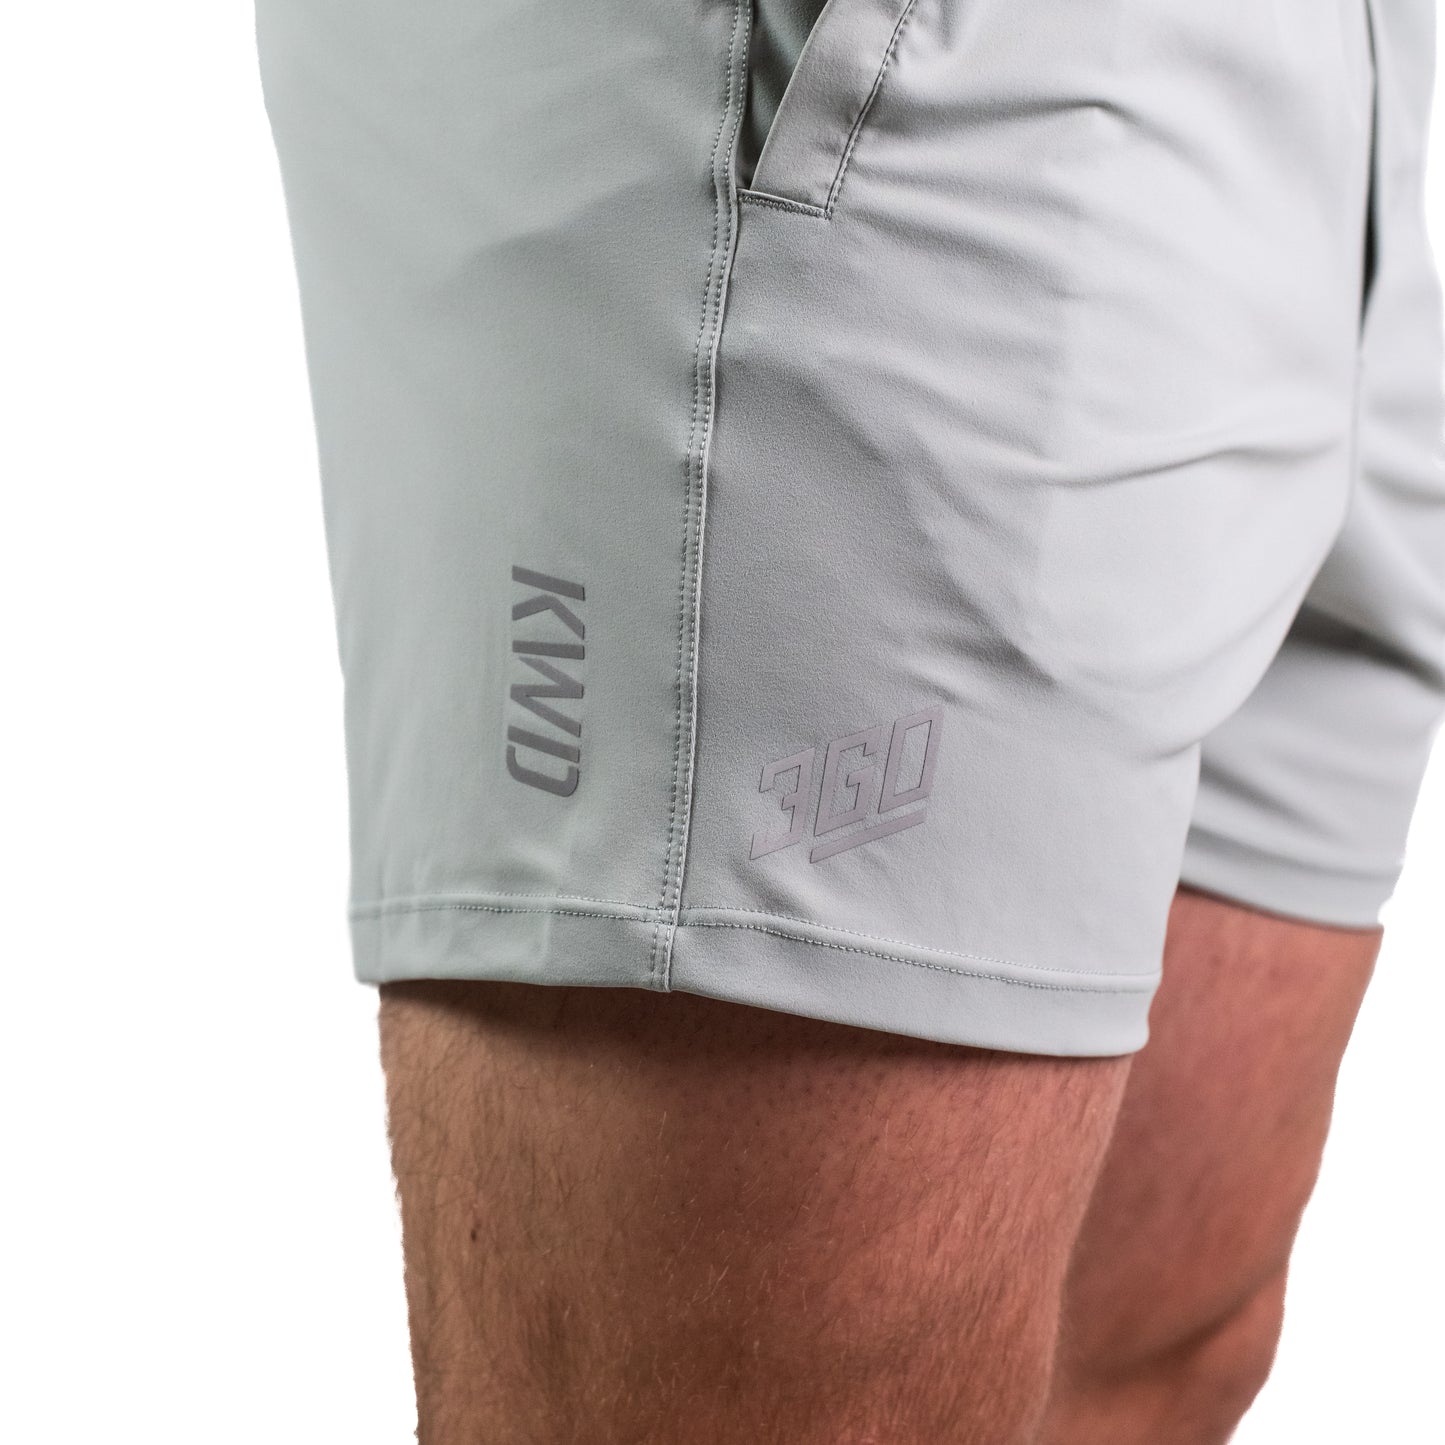 
                  
                    360Go KWD Shorts - Light Gray
                  
                